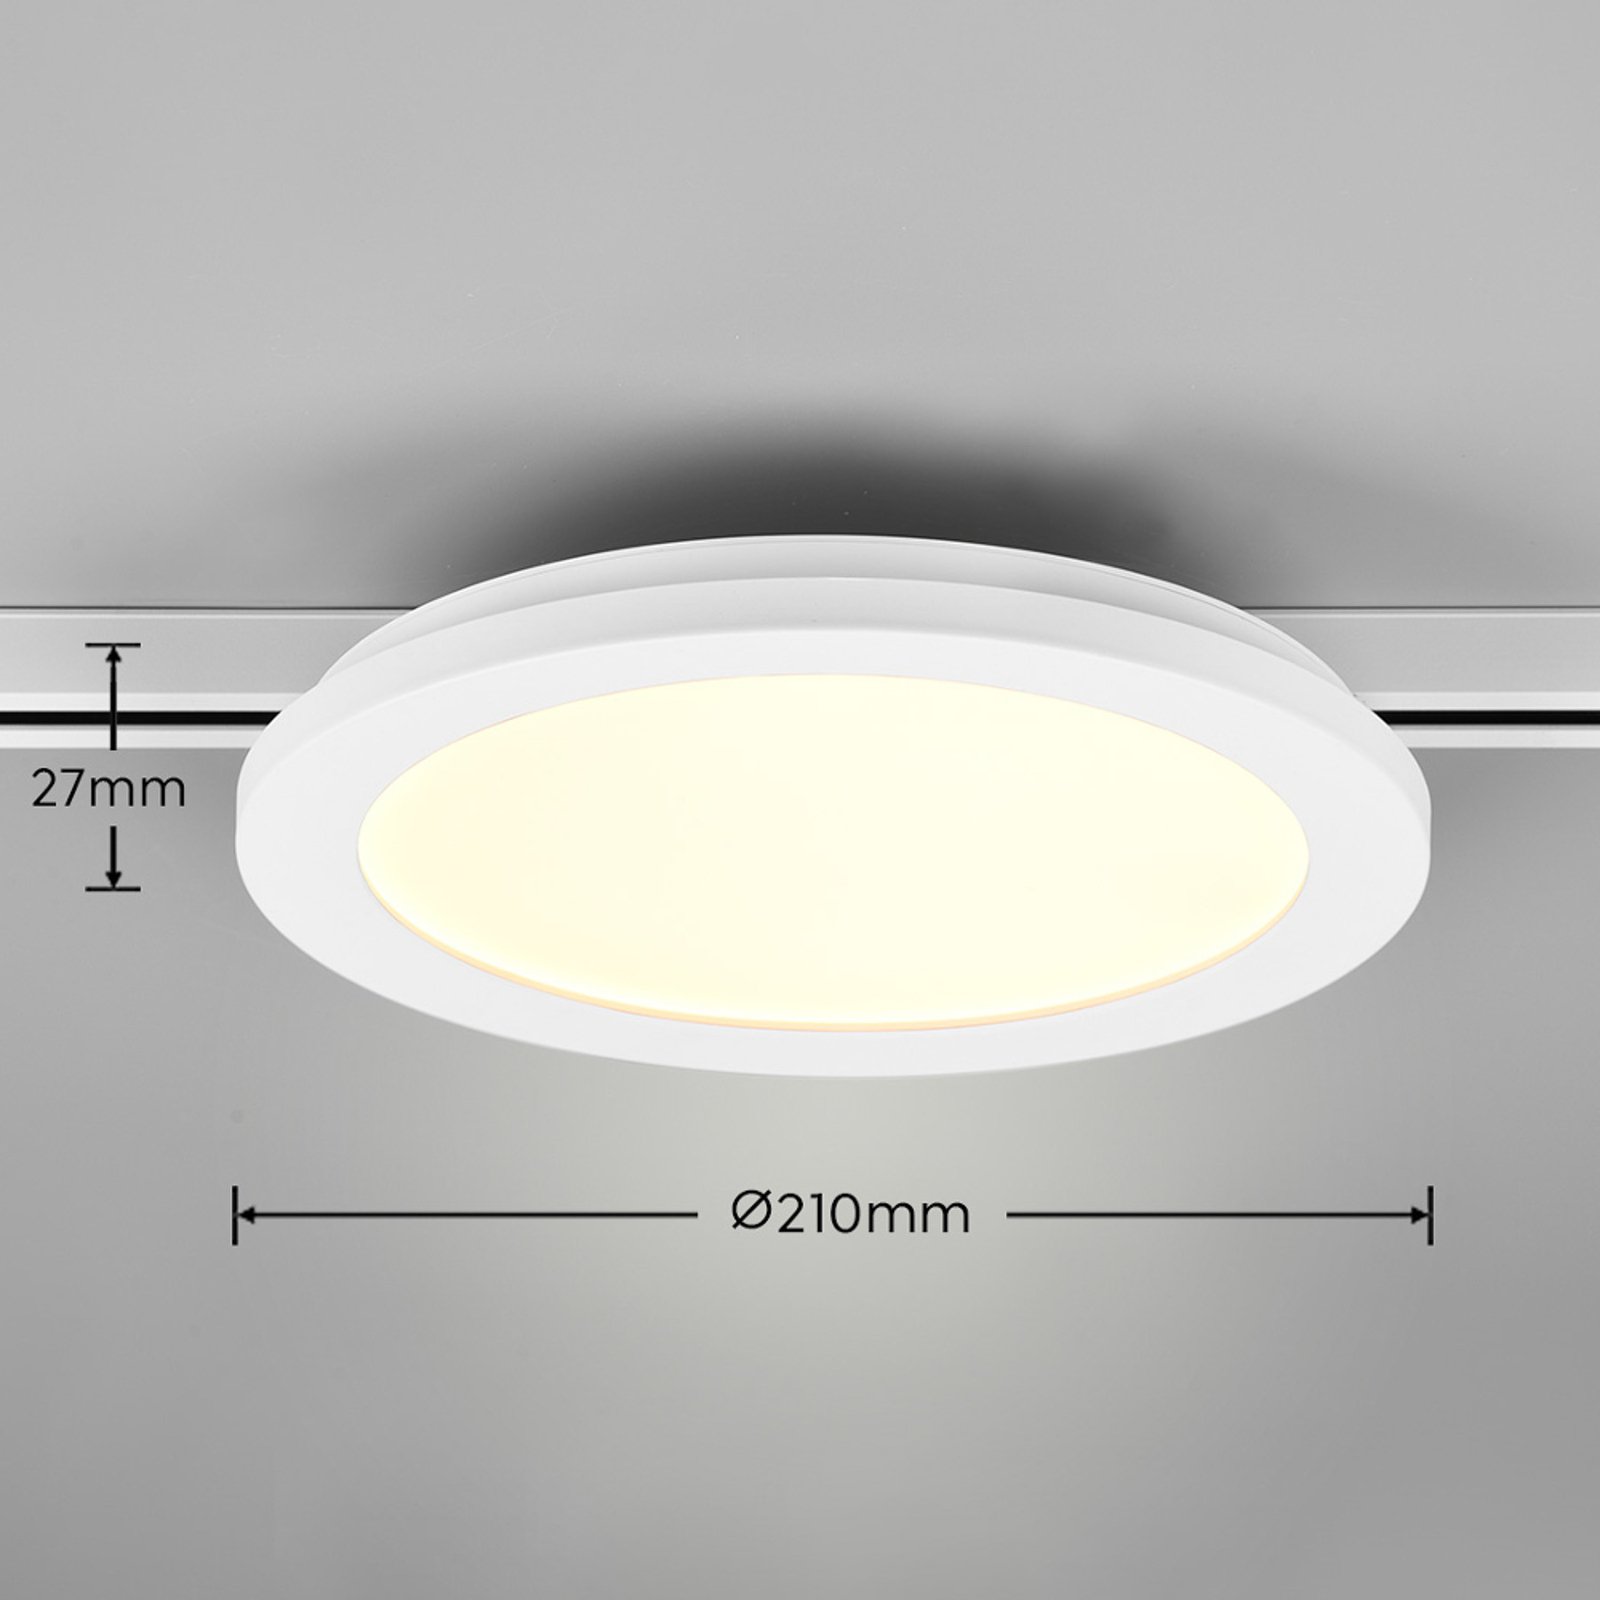 LED-Deckenlampe Camillus DUOline, Ø 26 cm, weiß